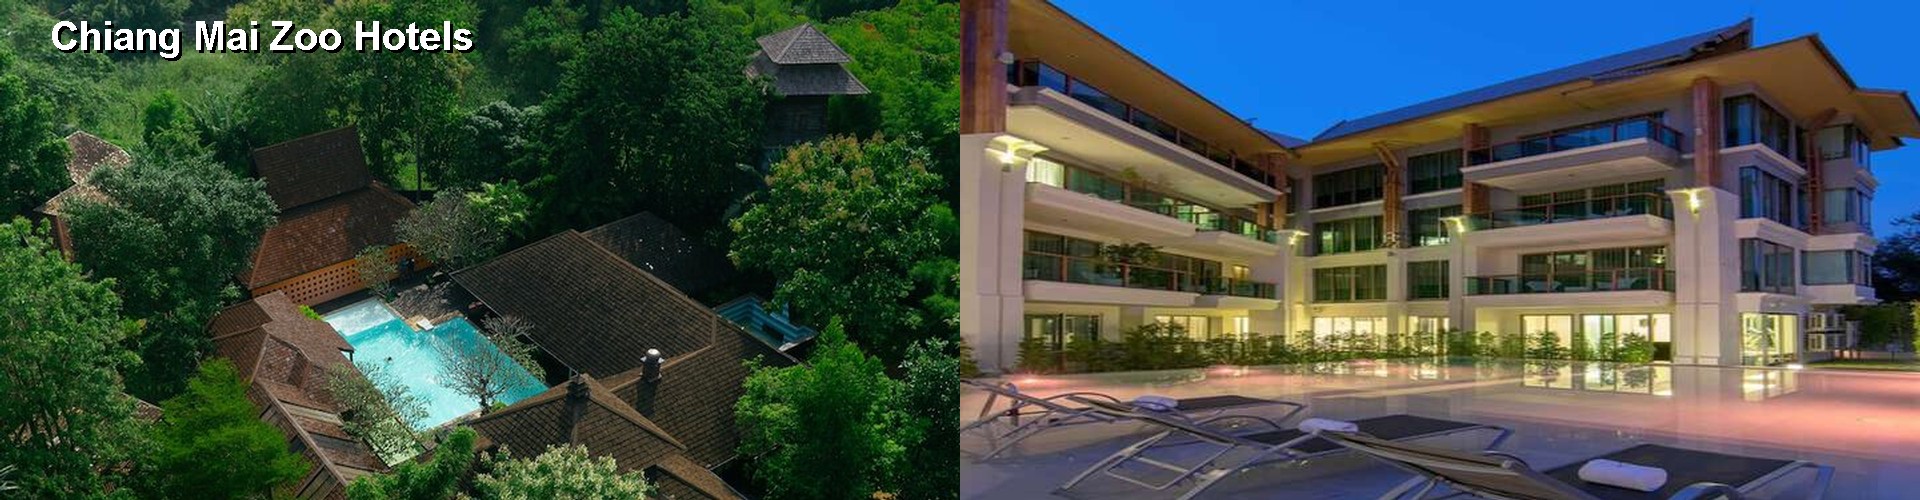 5 Best Hotels near Chiang Mai Zoo